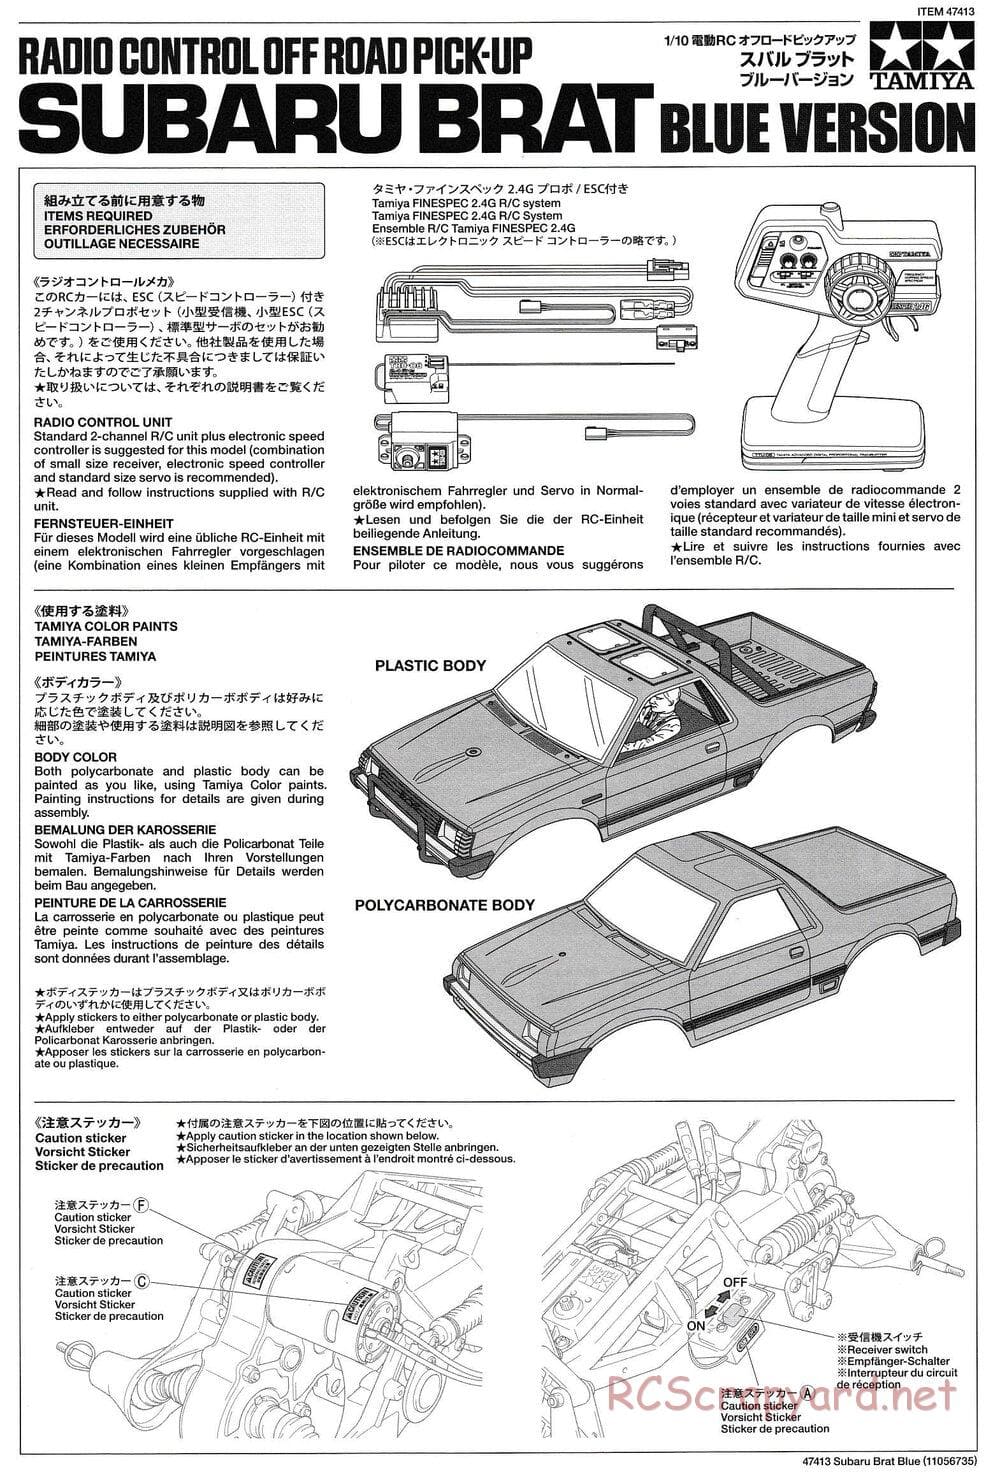 Tamiya - Subaru Brat Blue - ORV Chassis - Manual - Page 1